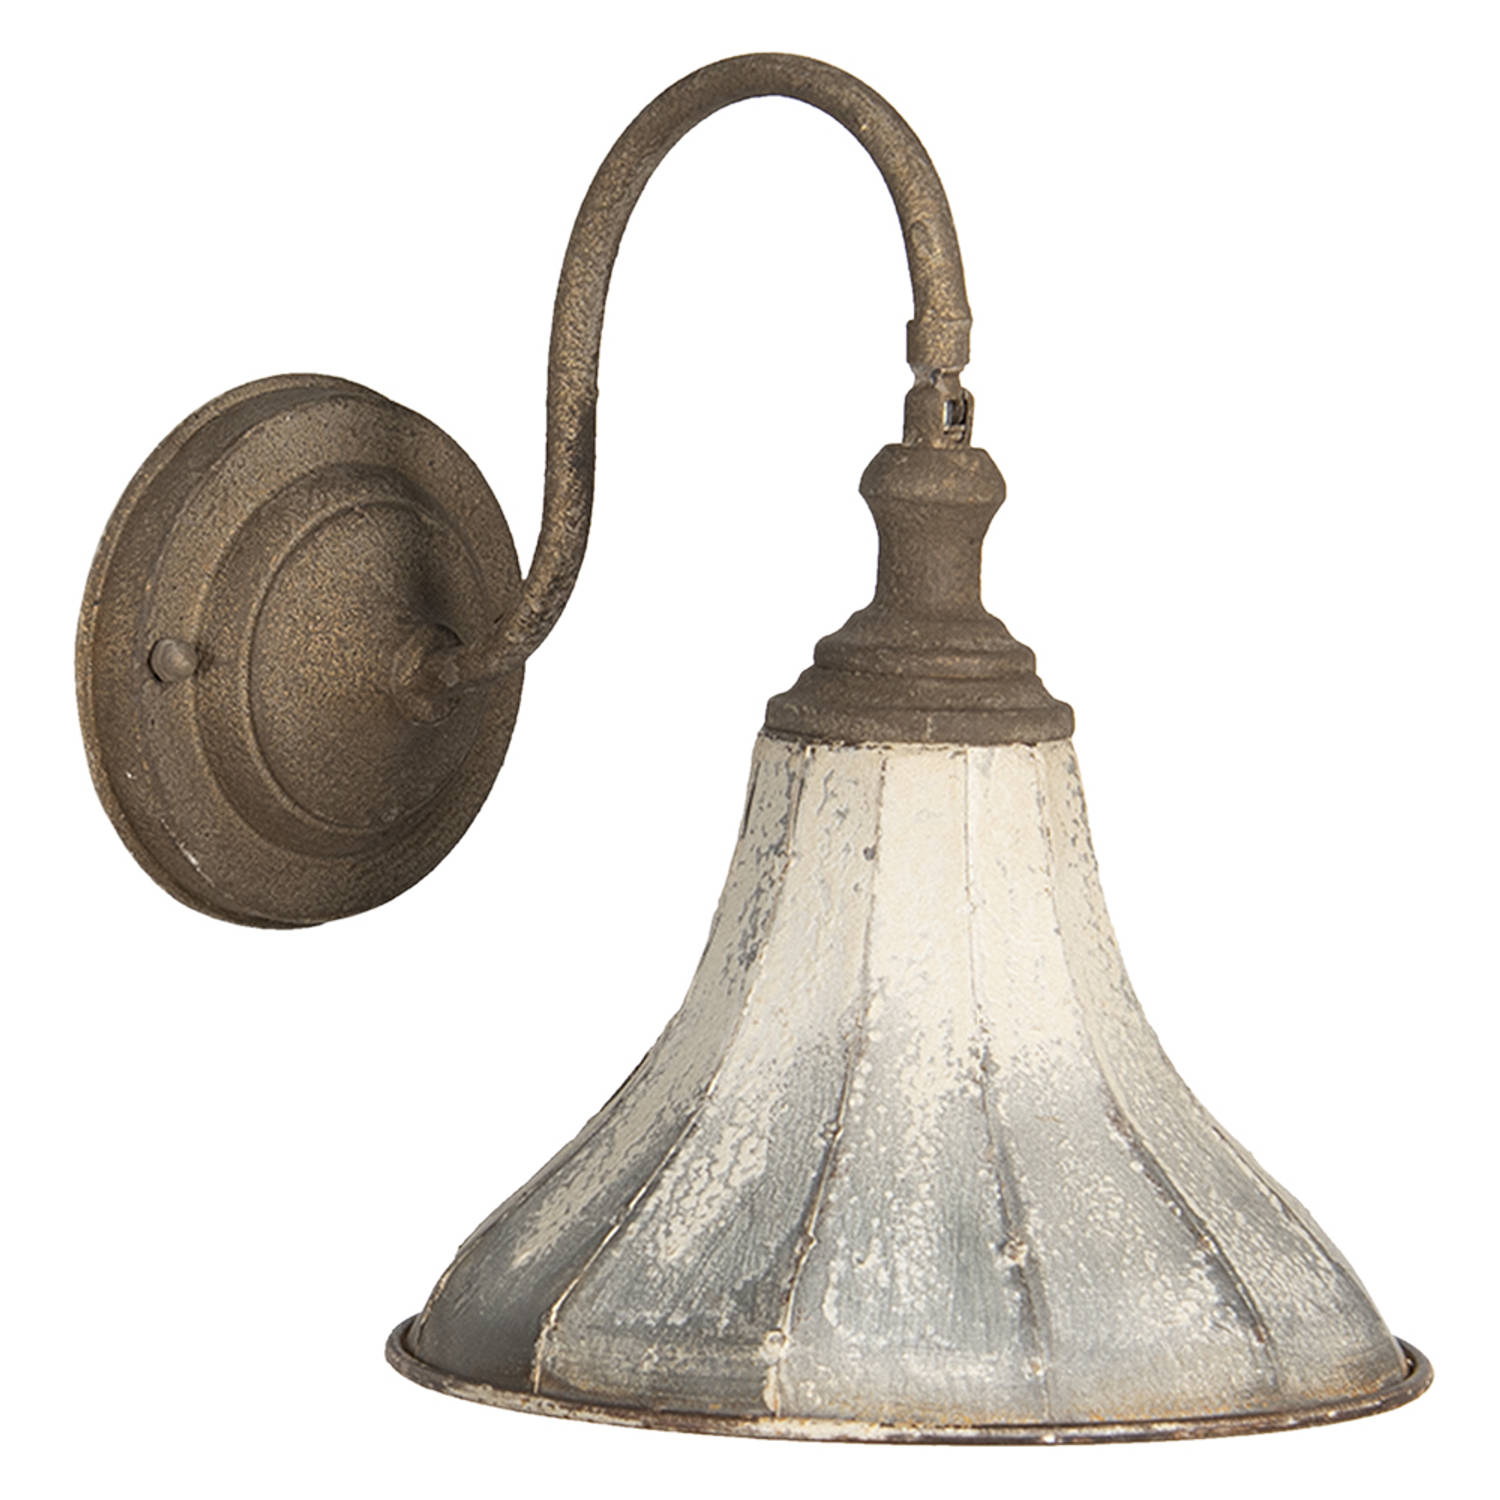 Haes Deco Wandlamp Shabby Chic Vintage-Retro Lamp, 31x23x27 Cm Bruin-Wit Metaal Muurlamp, Sfeerlamp